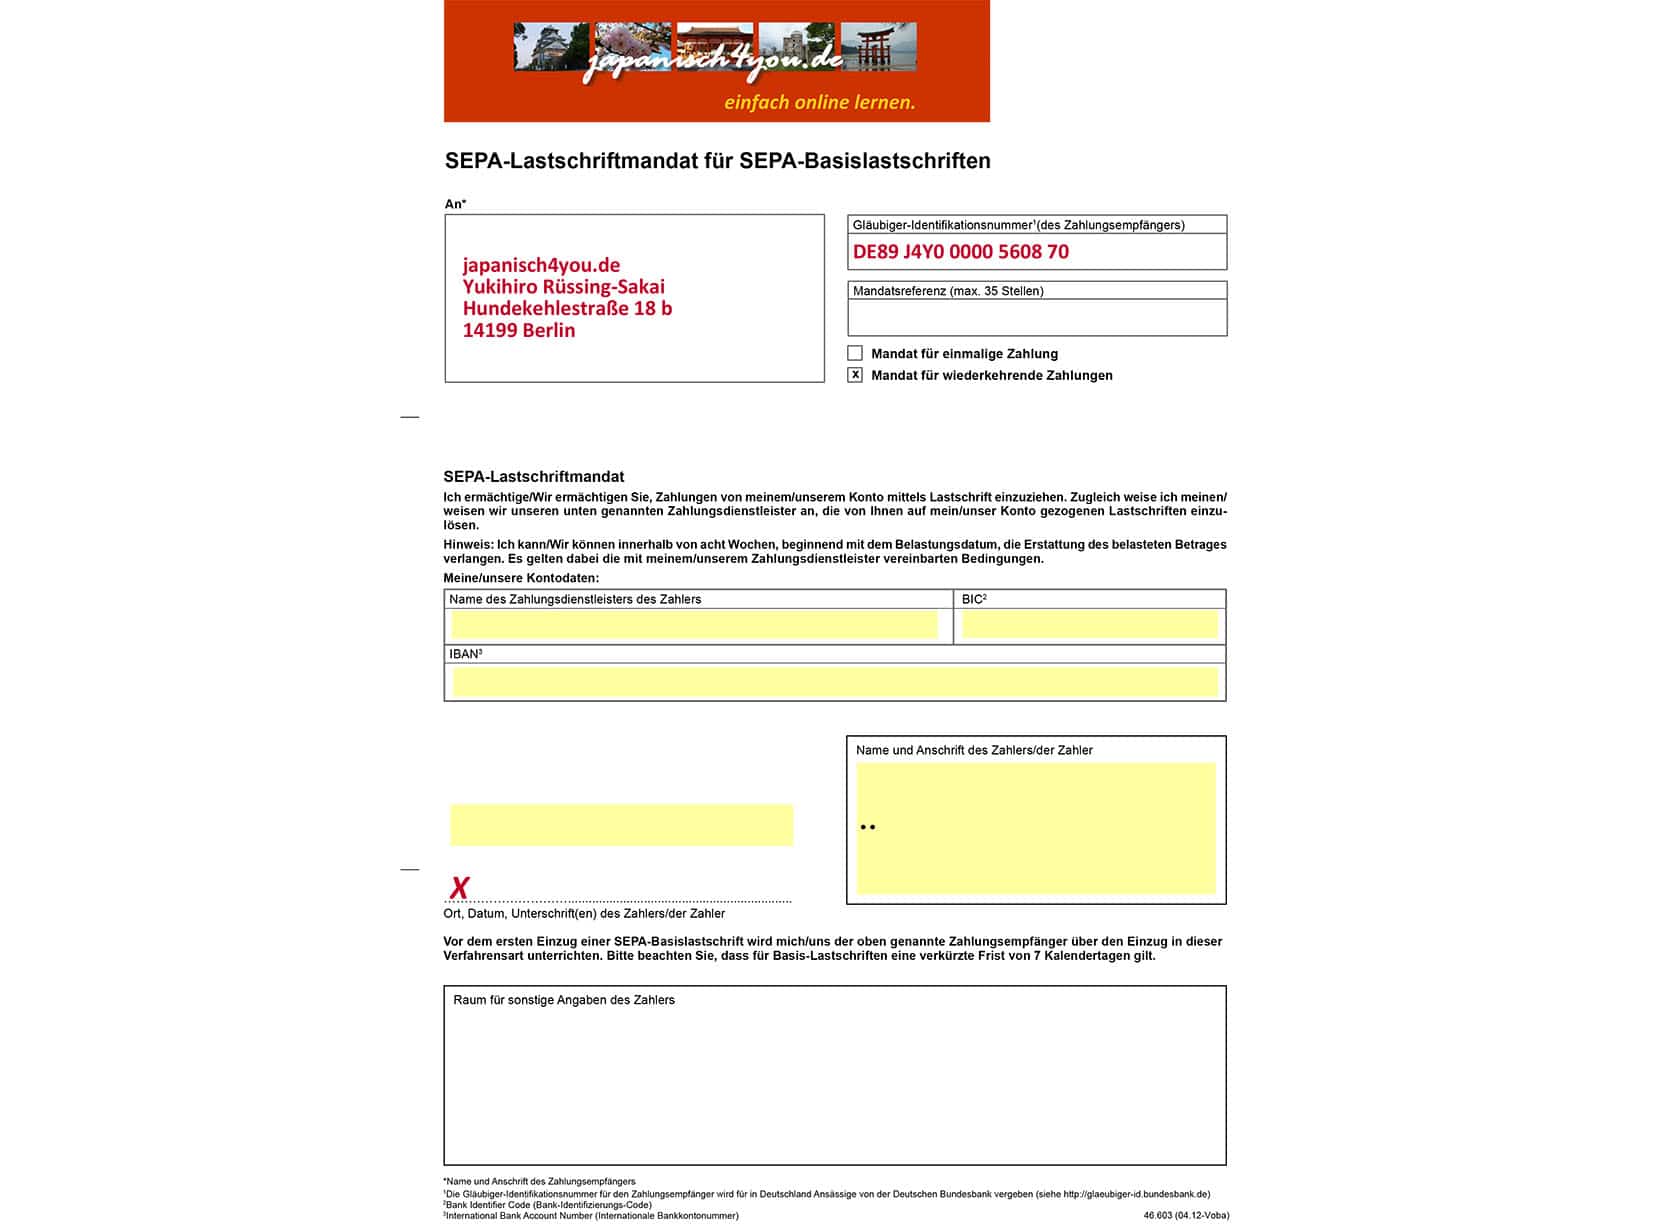 SEPA-Basis-Lastschriftmandat - online oder als pdf-Datei